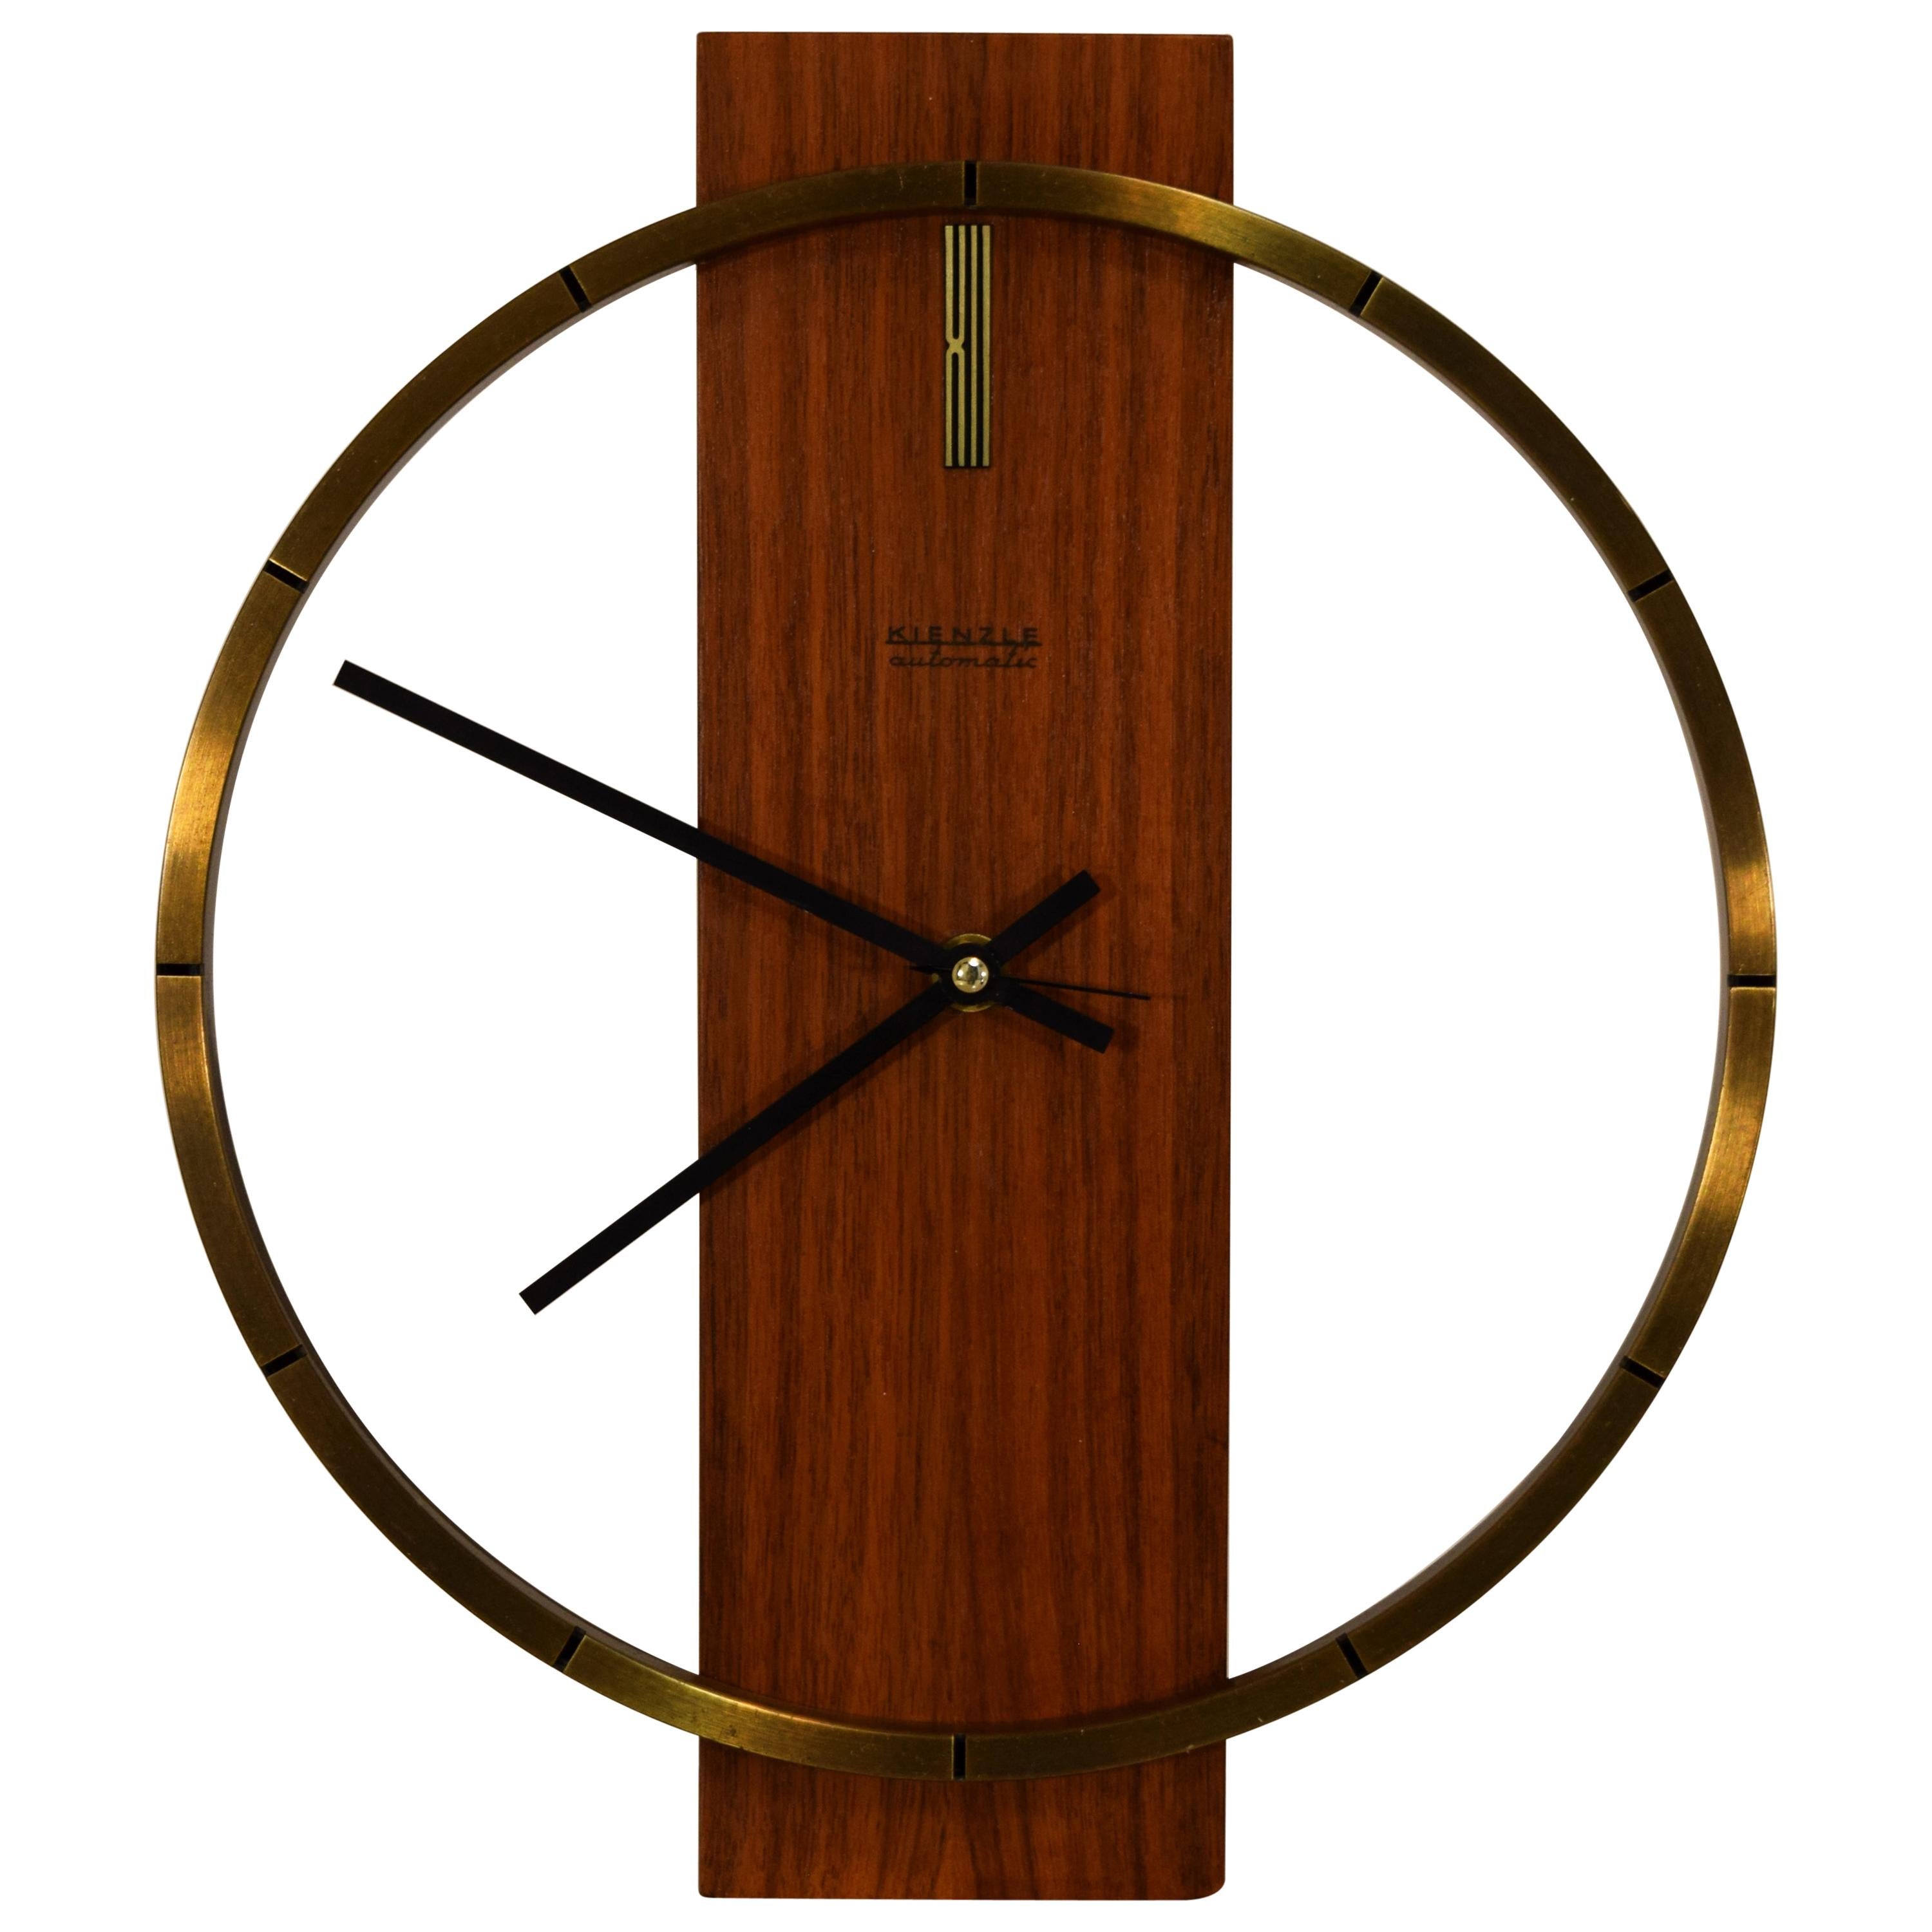 Kienzle Automatic Clock, circa 1960